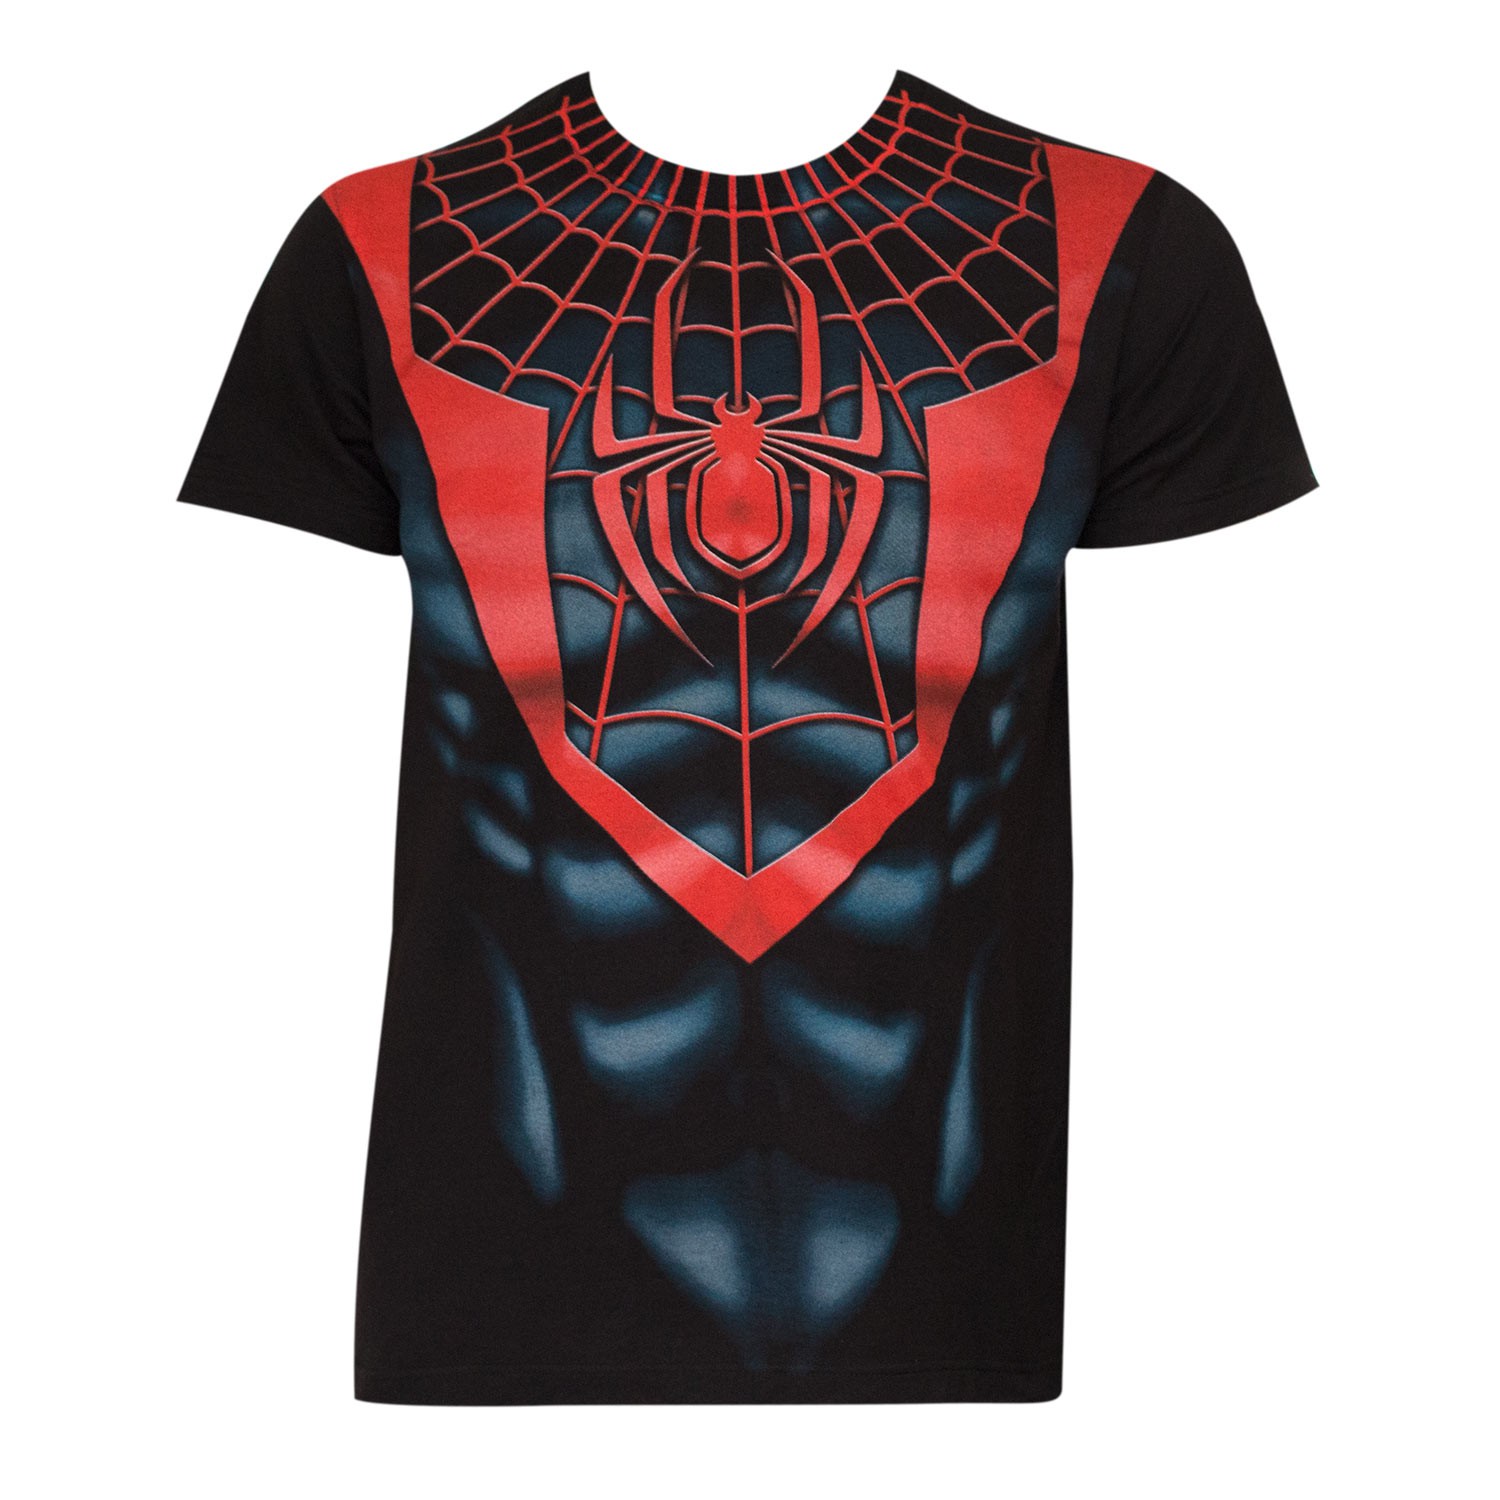 Spider-Man Morales Suit Costume T-Shirt